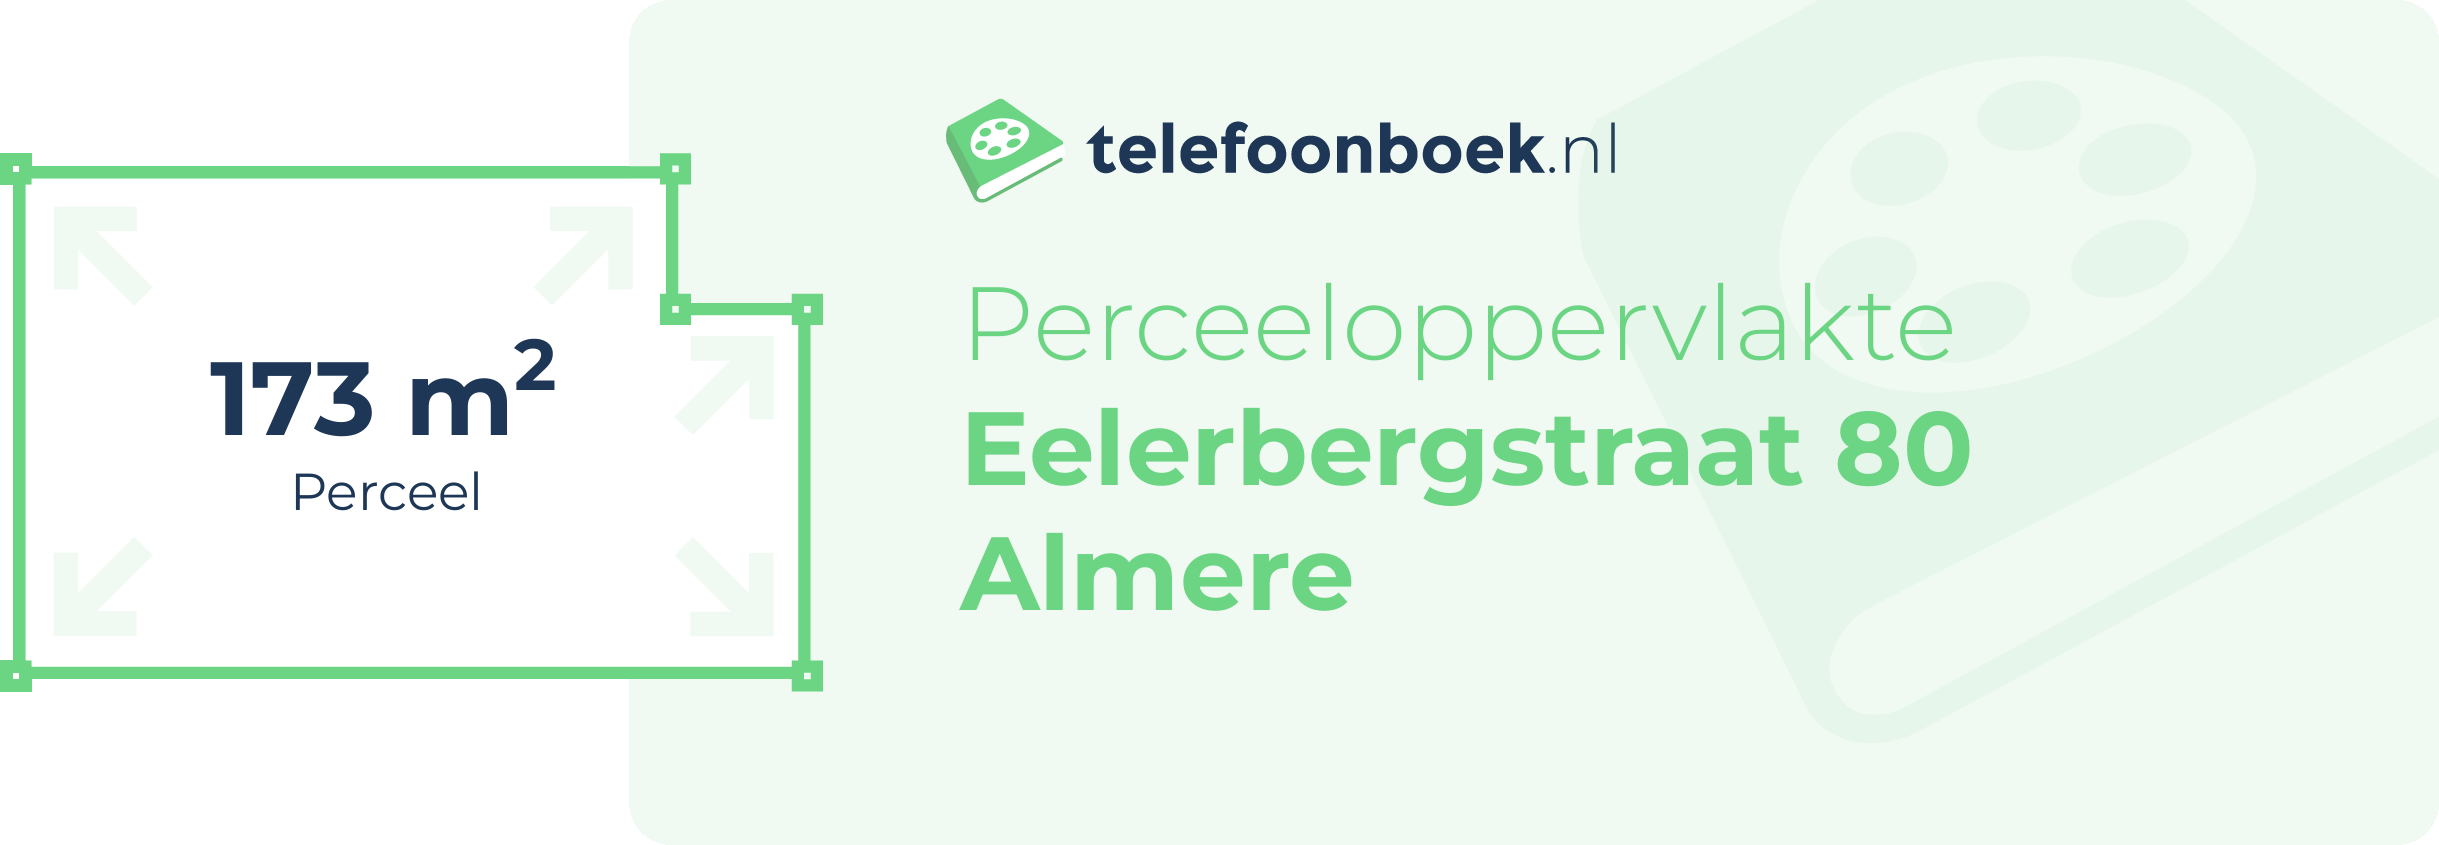 Perceeloppervlakte Eelerbergstraat 80 Almere